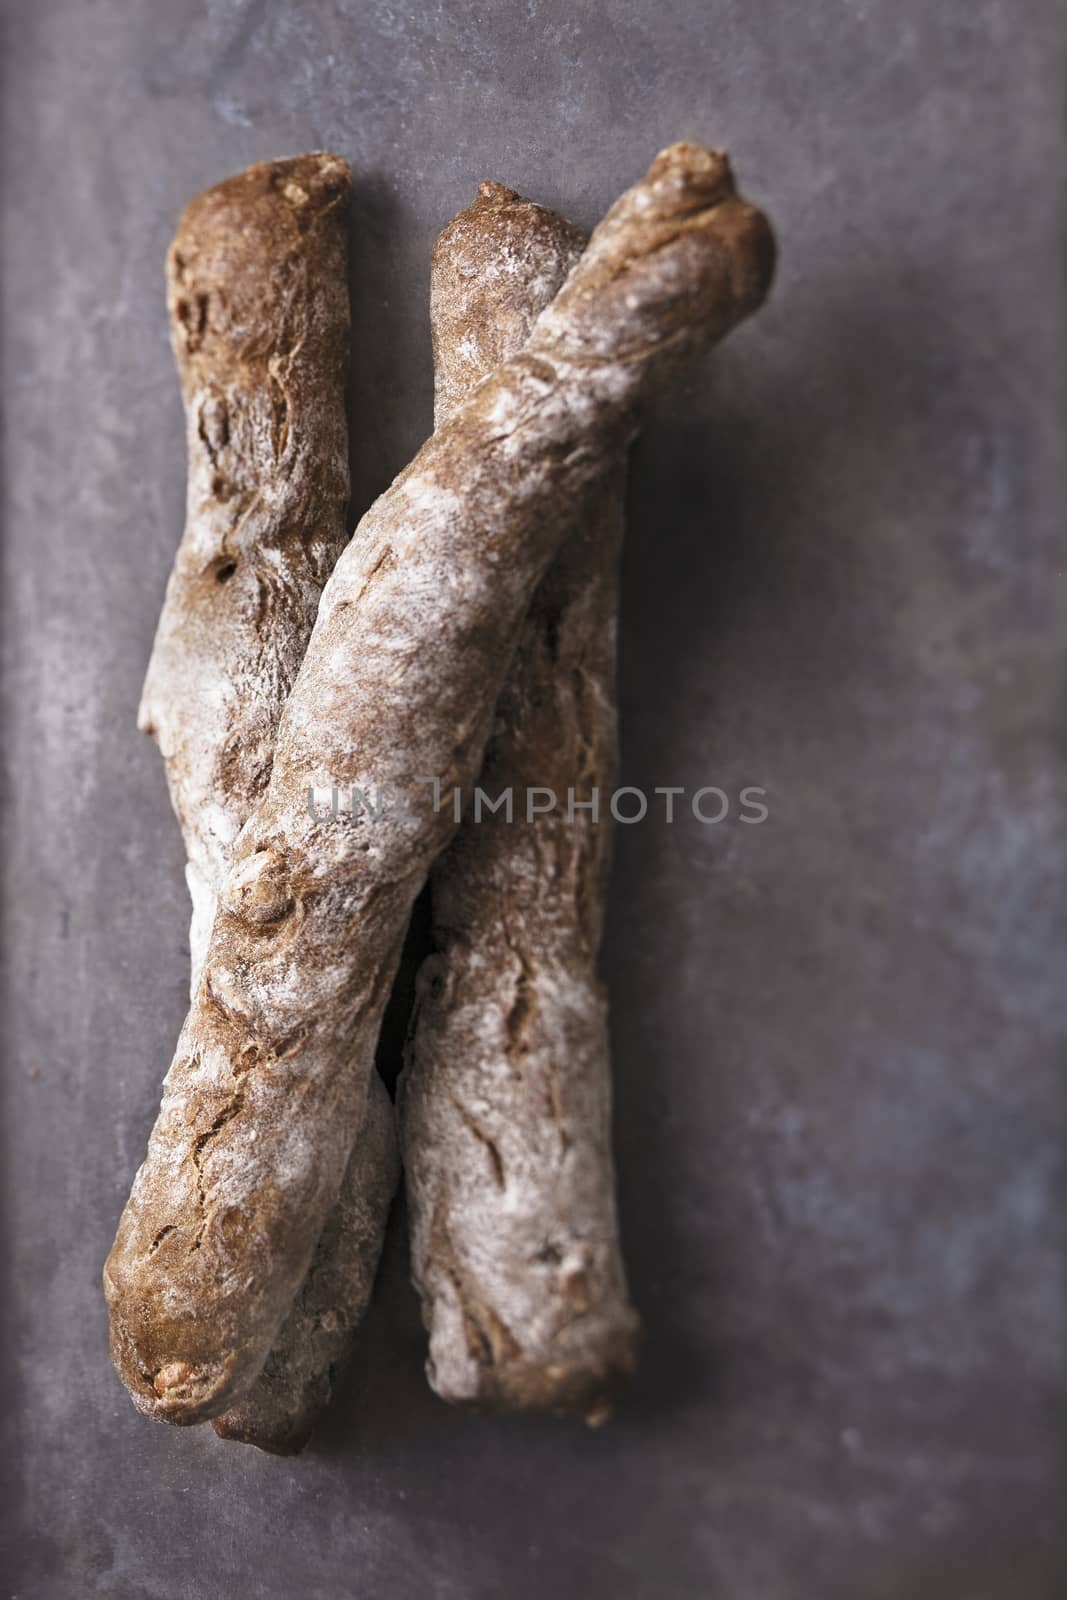 rustic artisan bread by zkruger